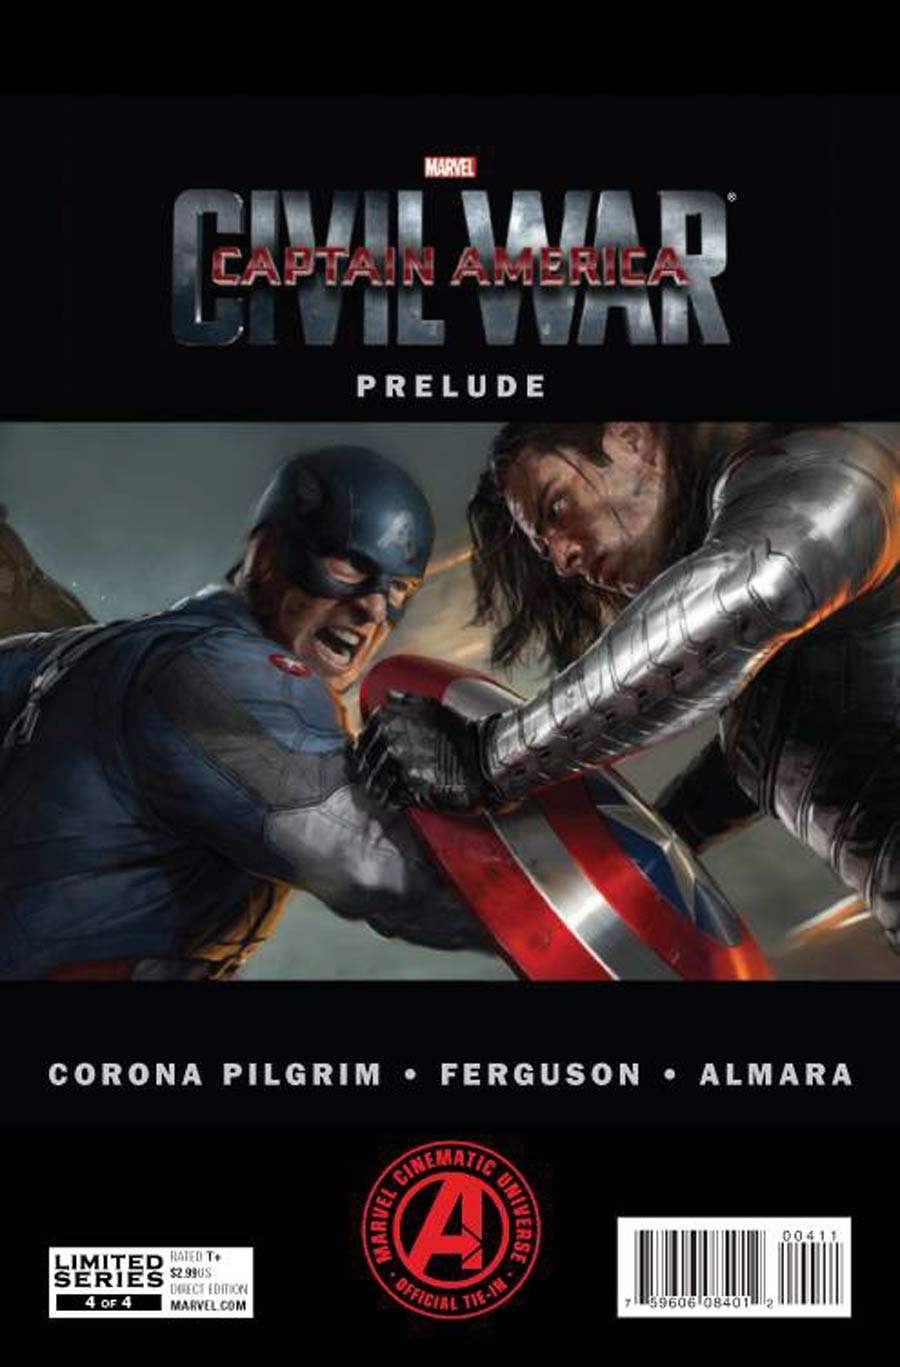 Marvels Captain America Civil War Prelude #4